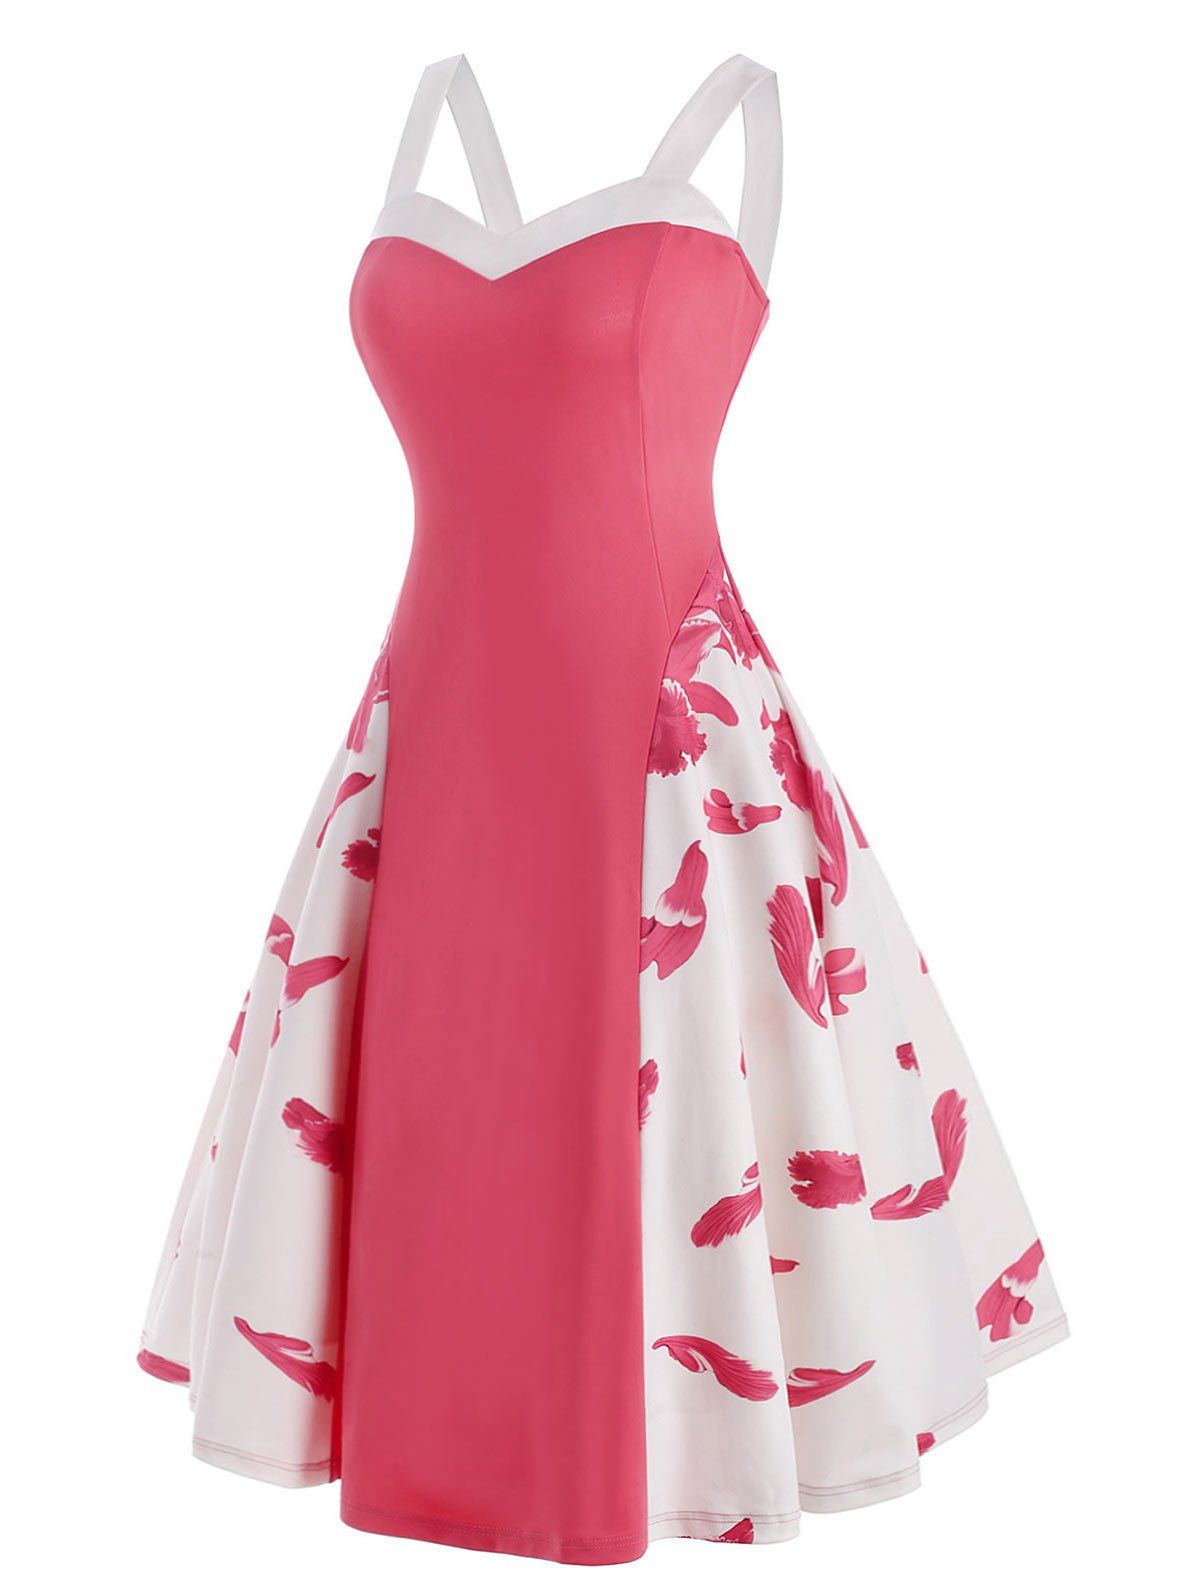 Floral Print Midi A Line Dress - LIGHT PINK M